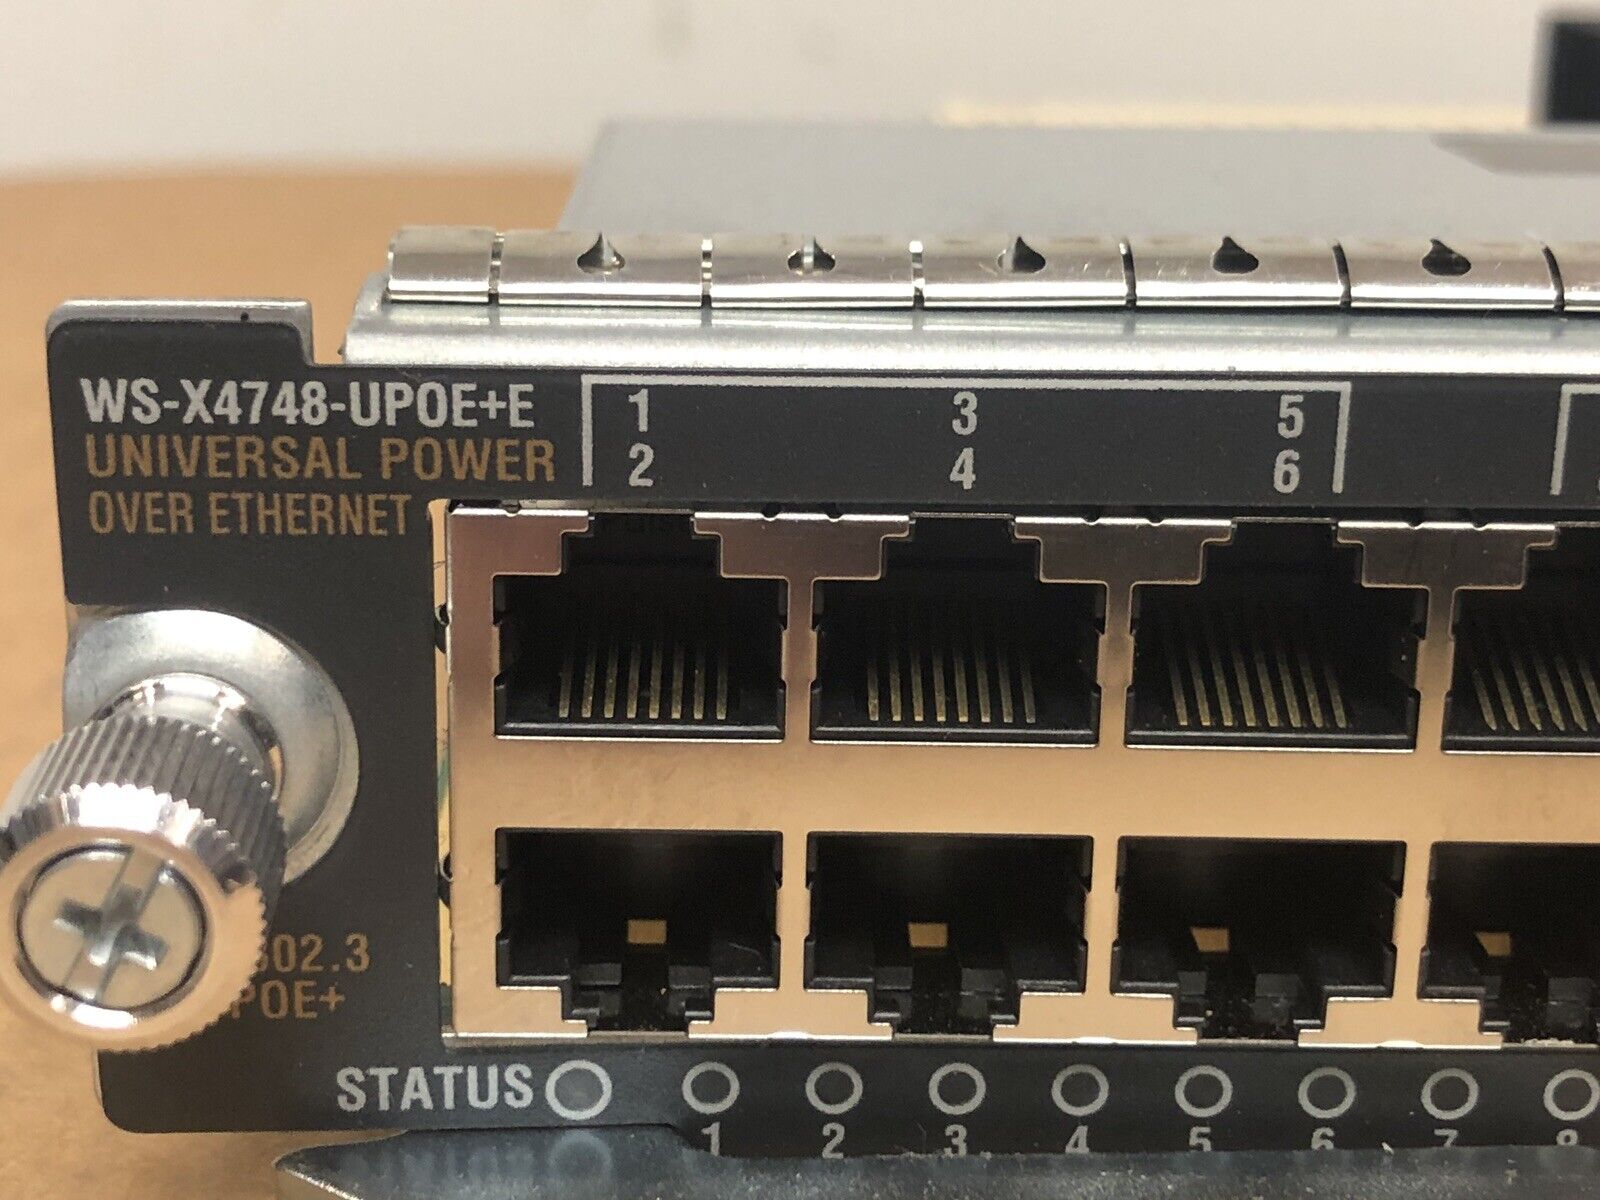 Cisco Catalyst WS-X4748-UPOE+E 4500-E Series UPoE Switch Line Card 48 Ports 1GbE.